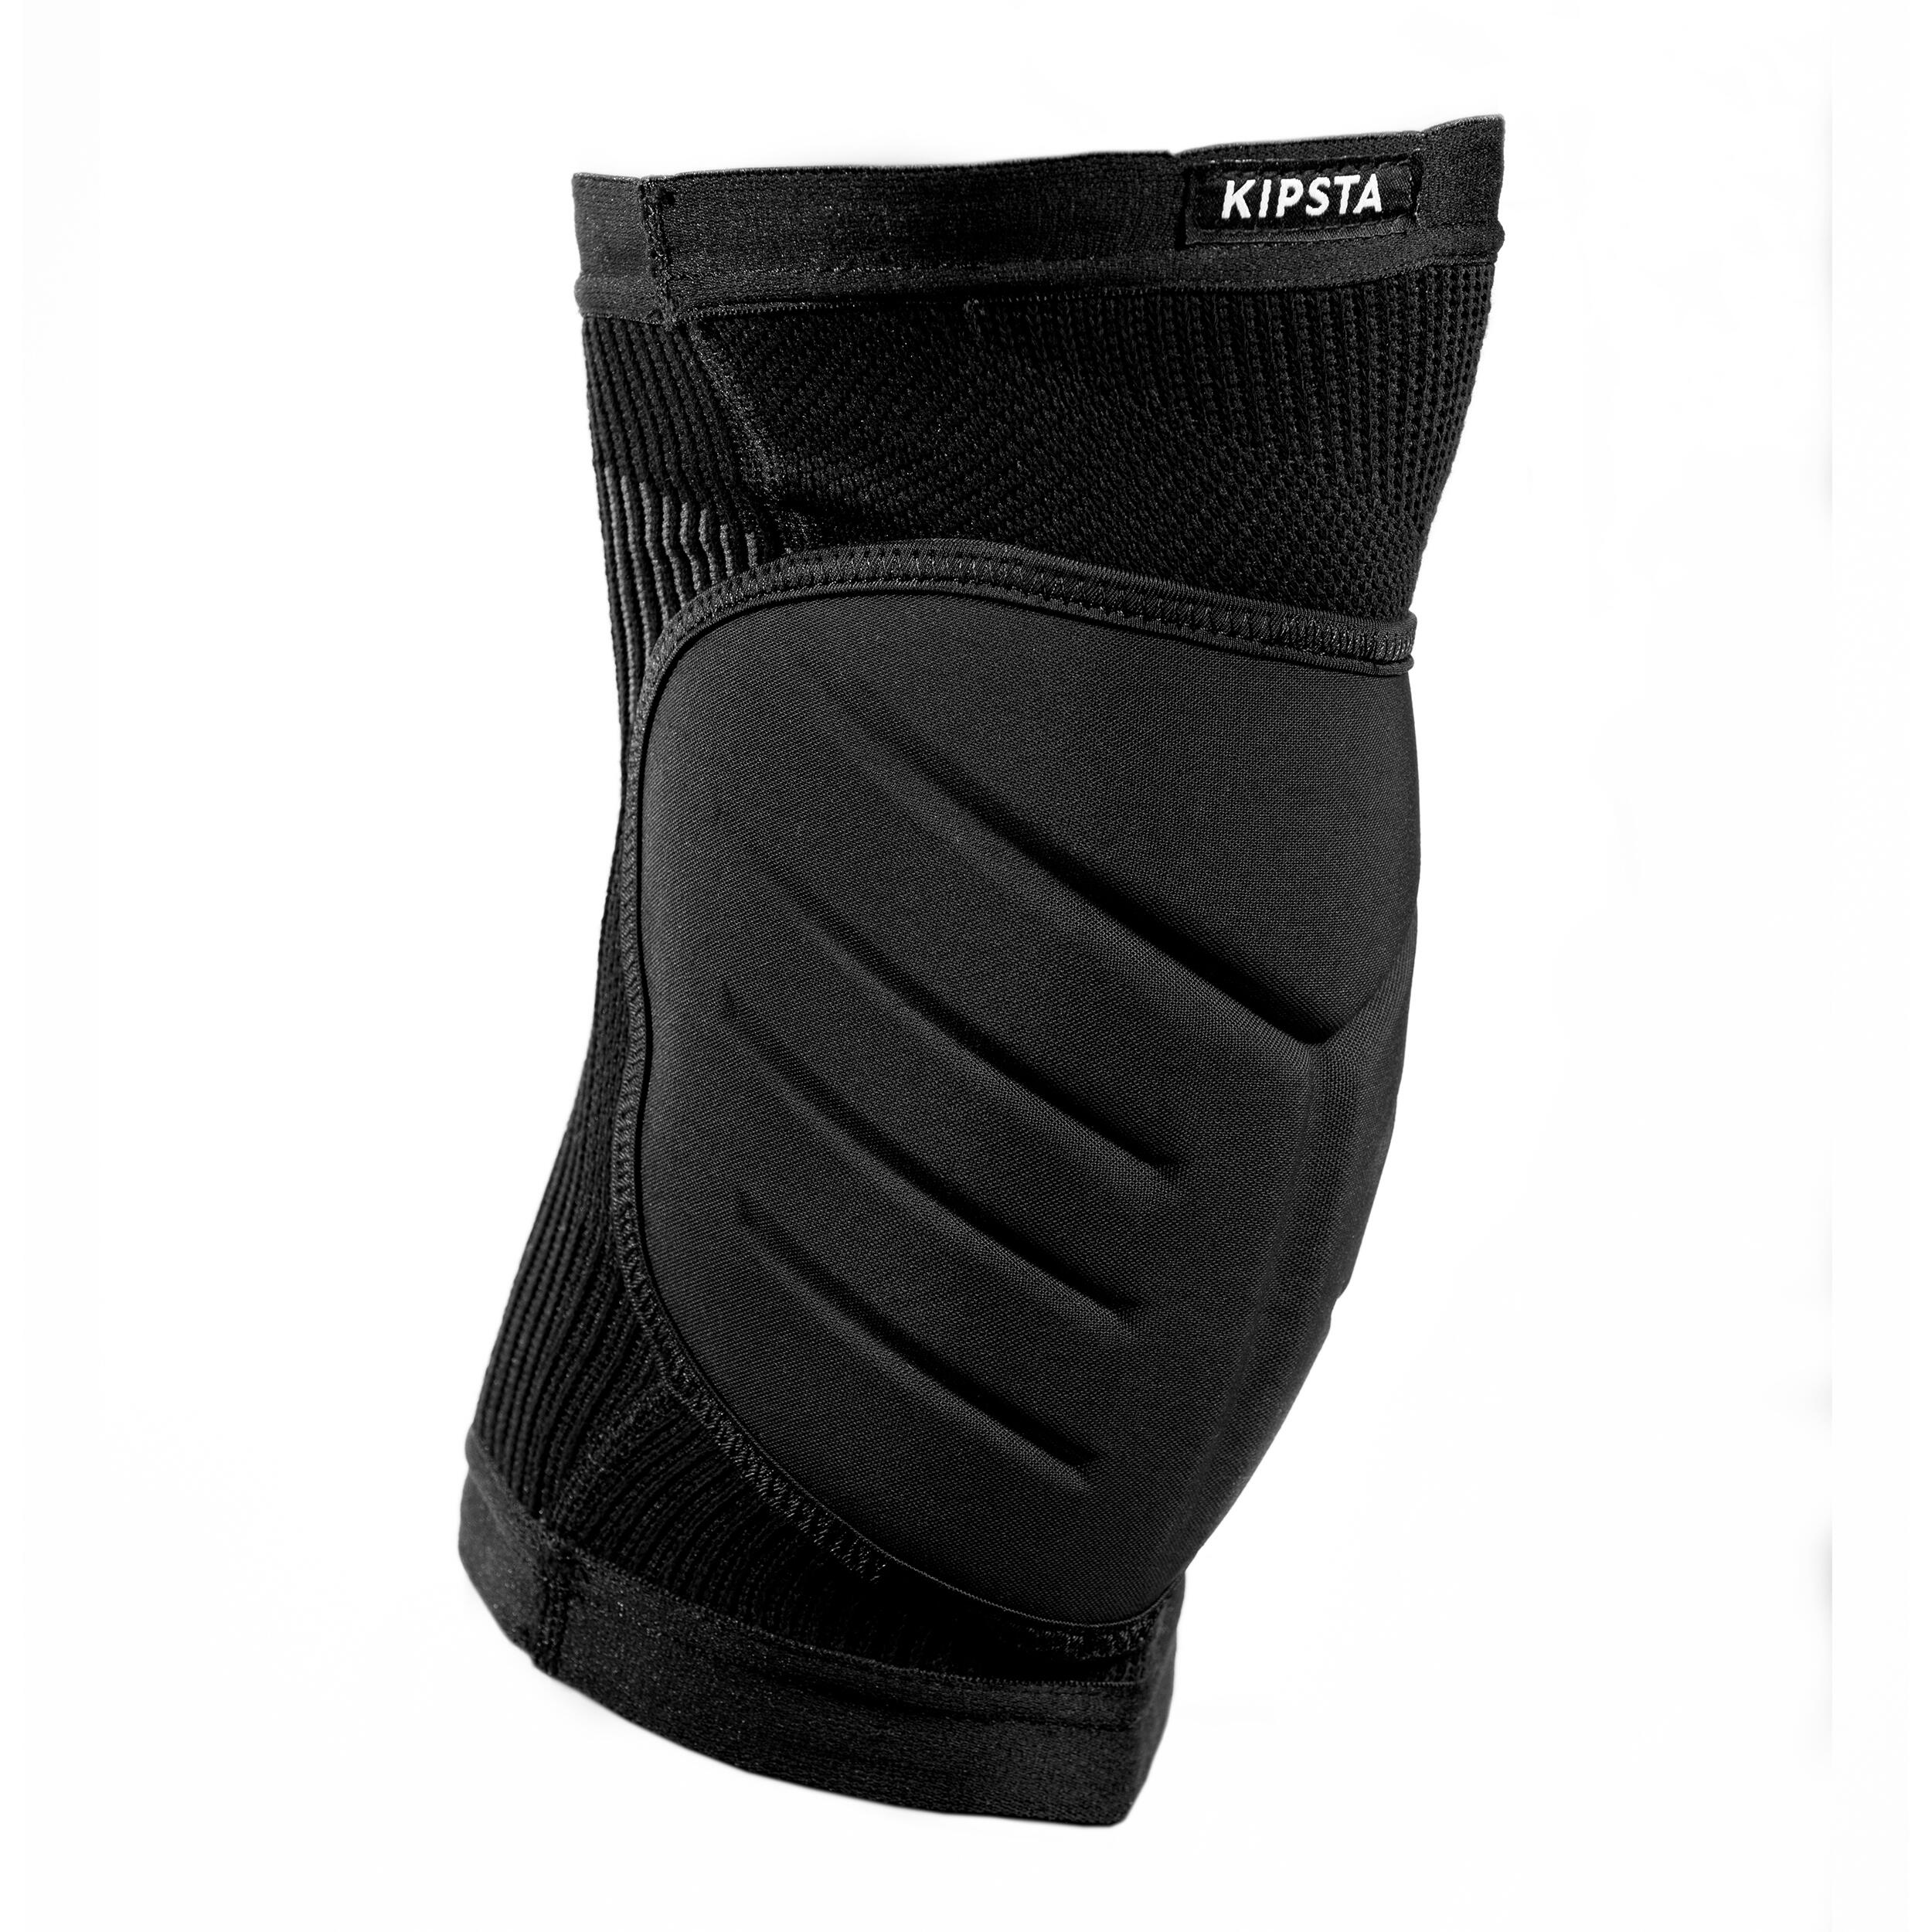 KIPSTA Futsal Goalkeeper Protective Knee Pads - Black